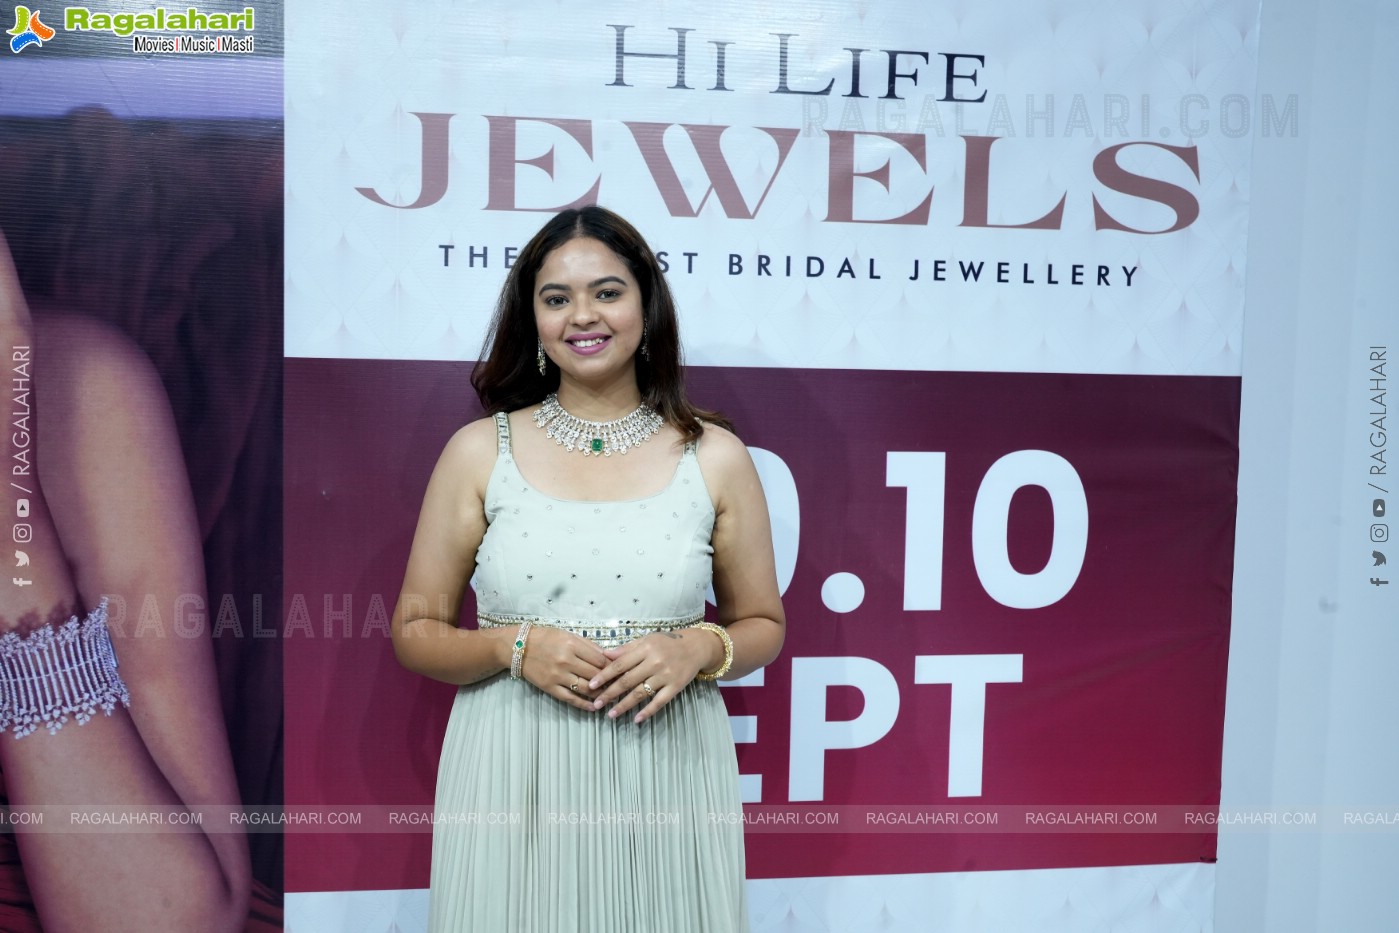 Hi Life Jewels Showcase Date Announcement Event